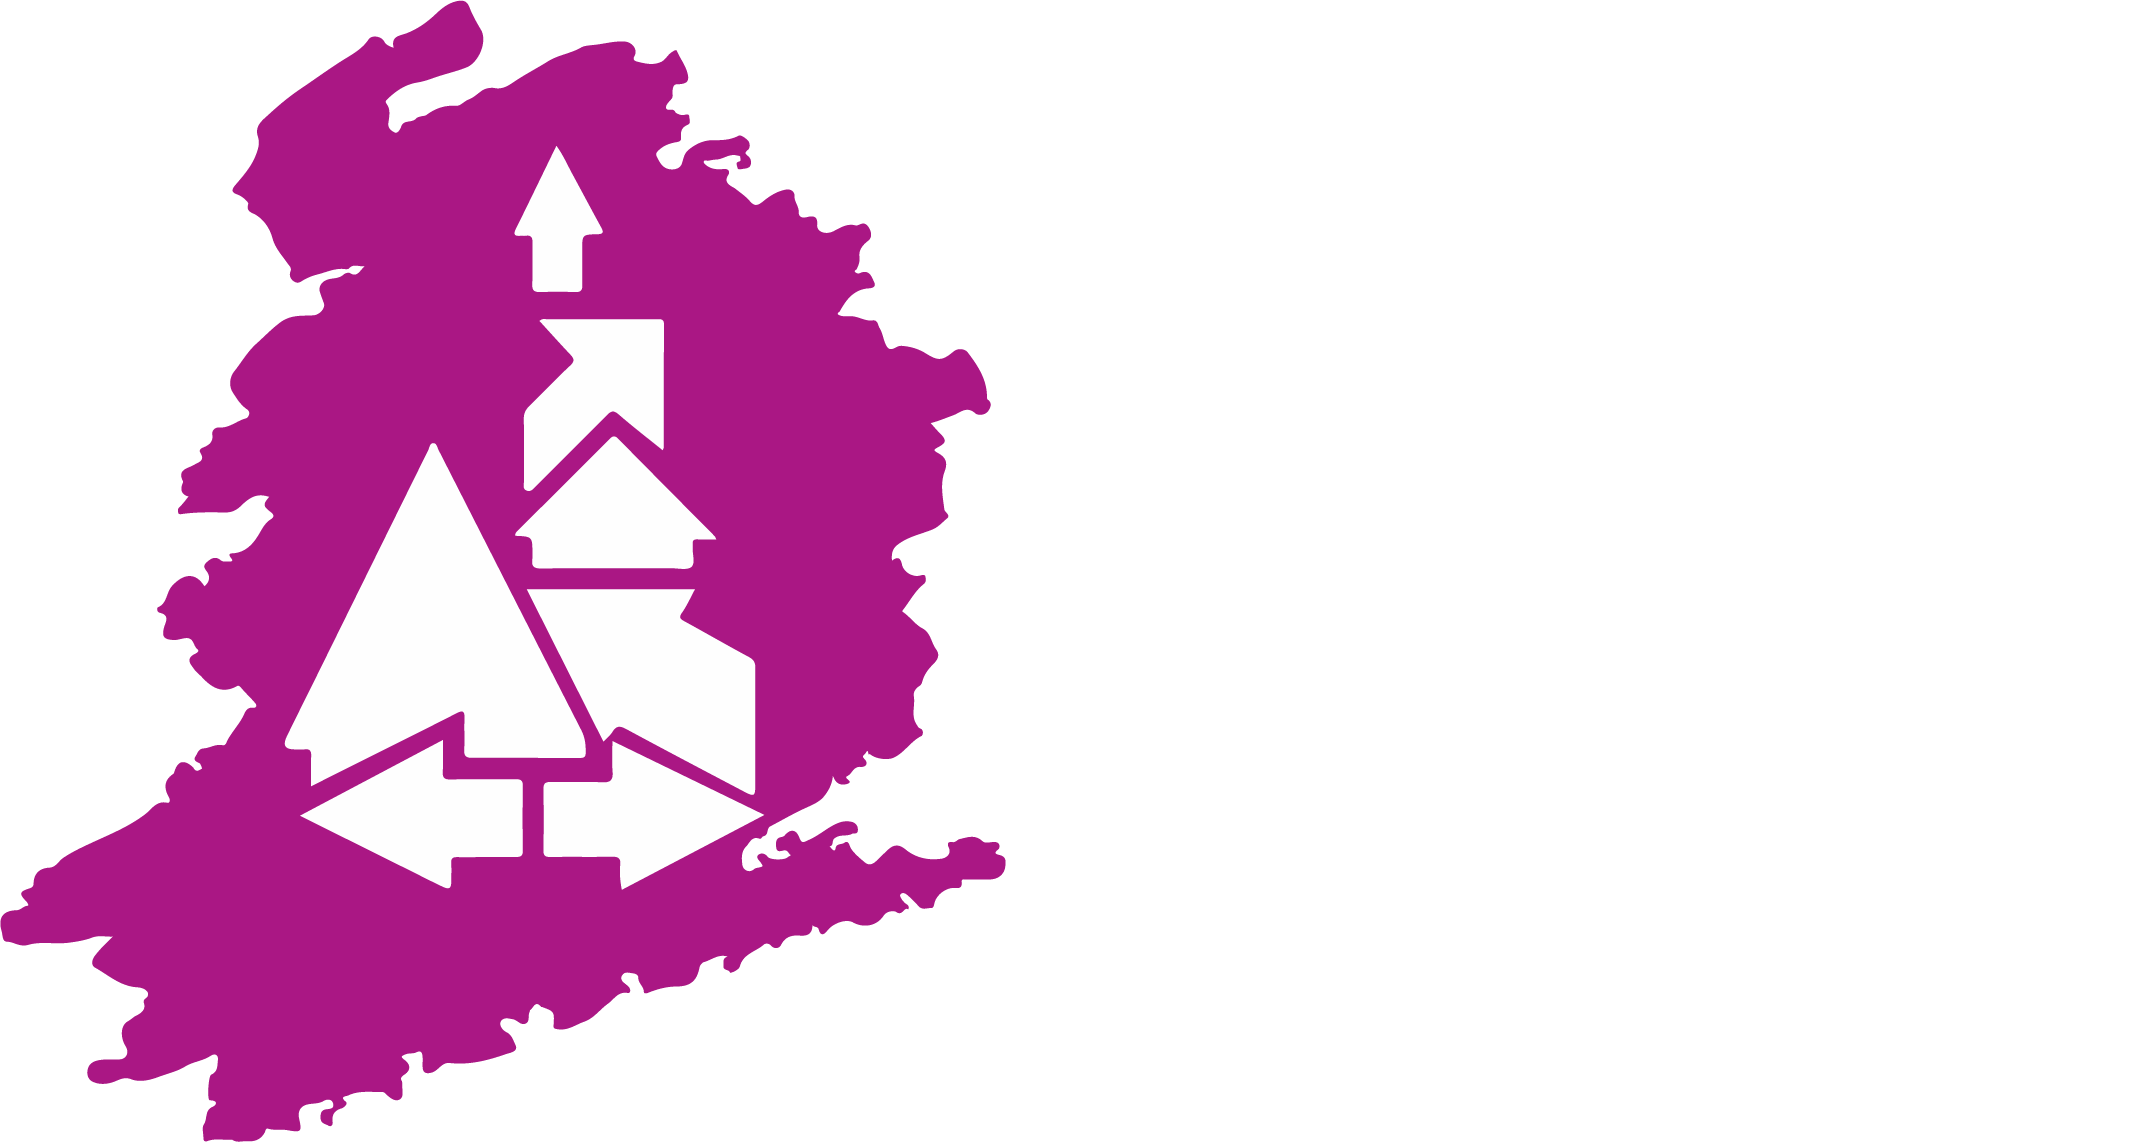 Logo du Foyer socioculturel d'Antoing
Lien vers: https://www.foyerculturelantoing.be/